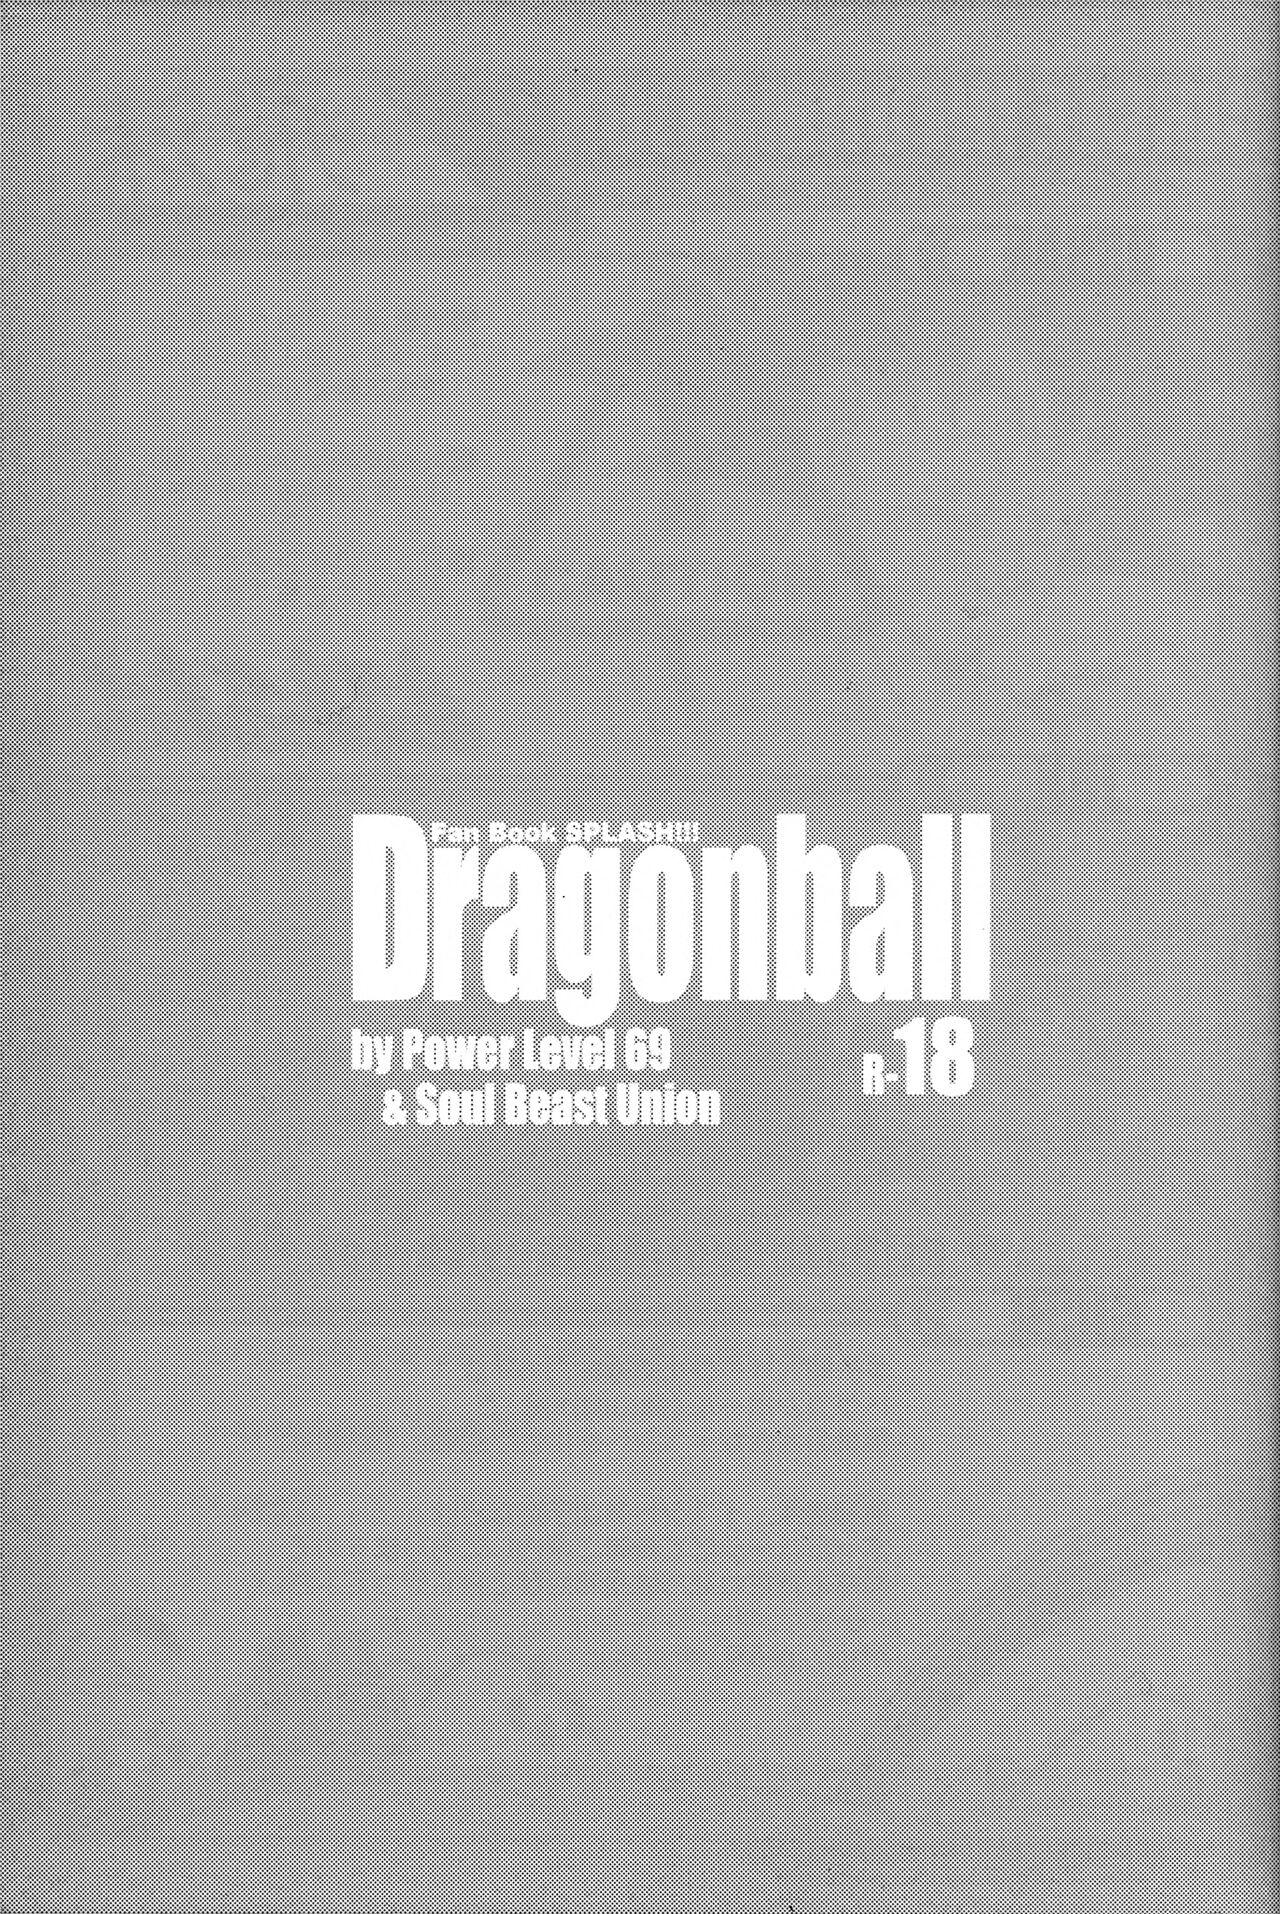 Dragonball Fan Book SPLASH!!! 4